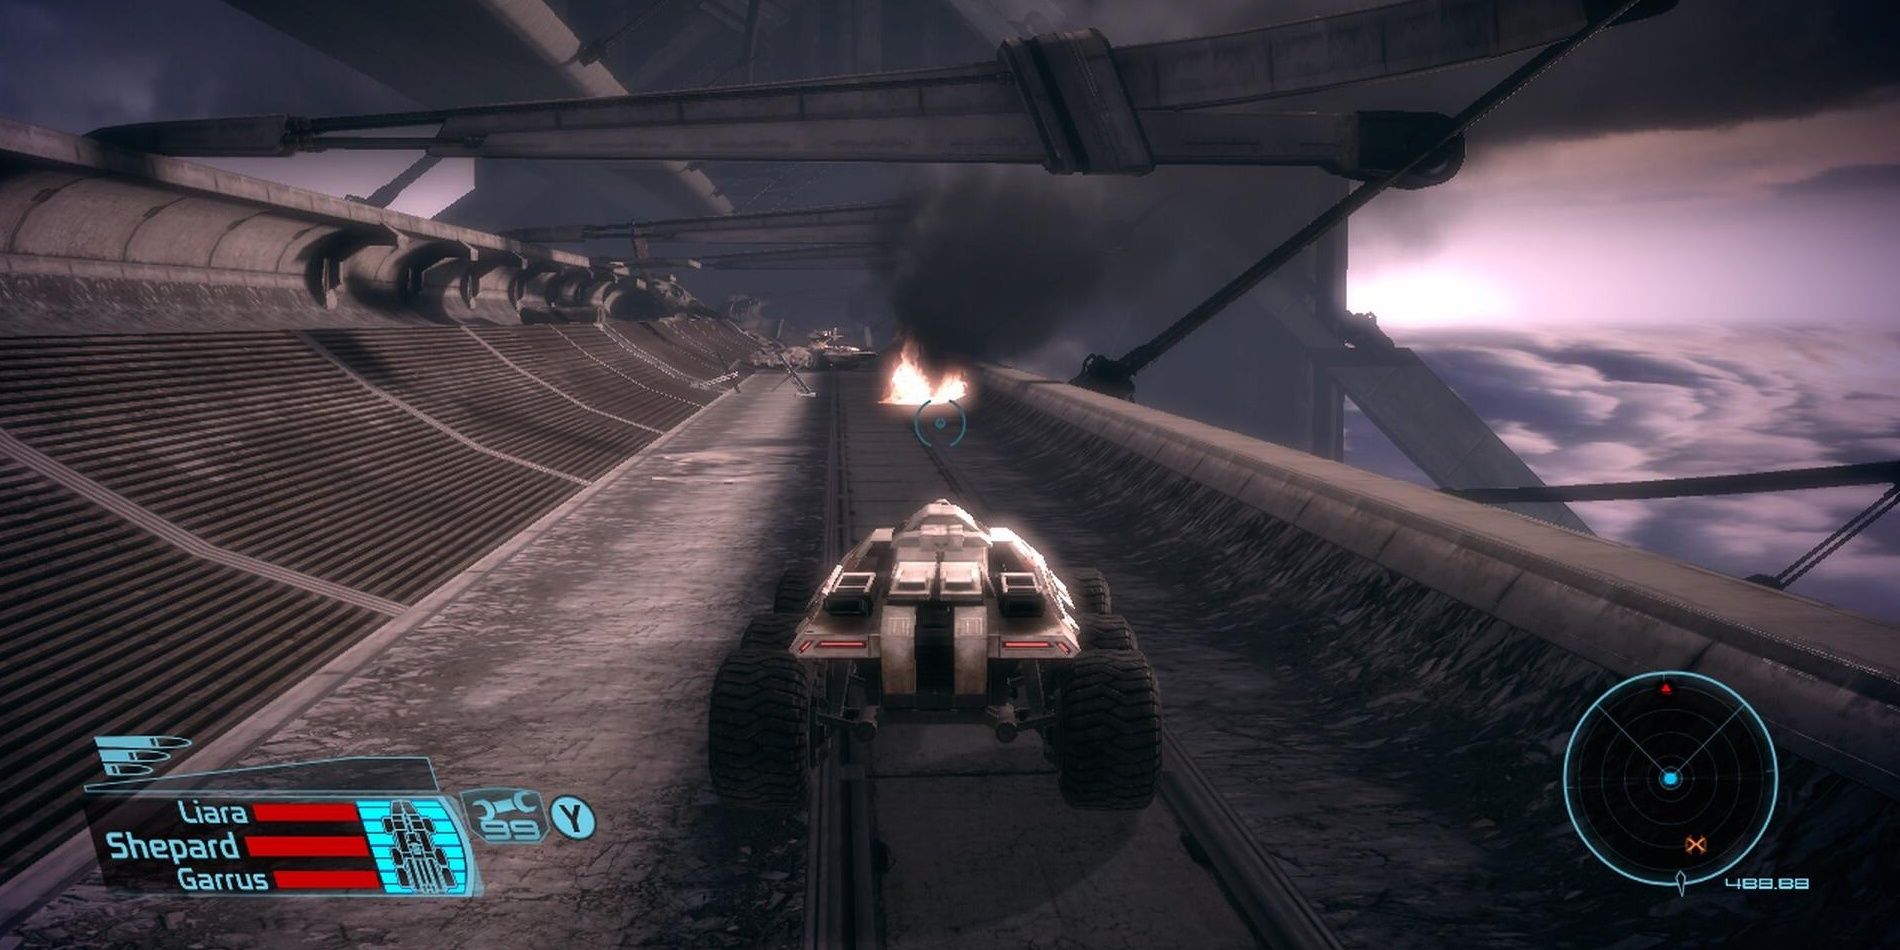 Shephard drives the Mako in Mass Effect